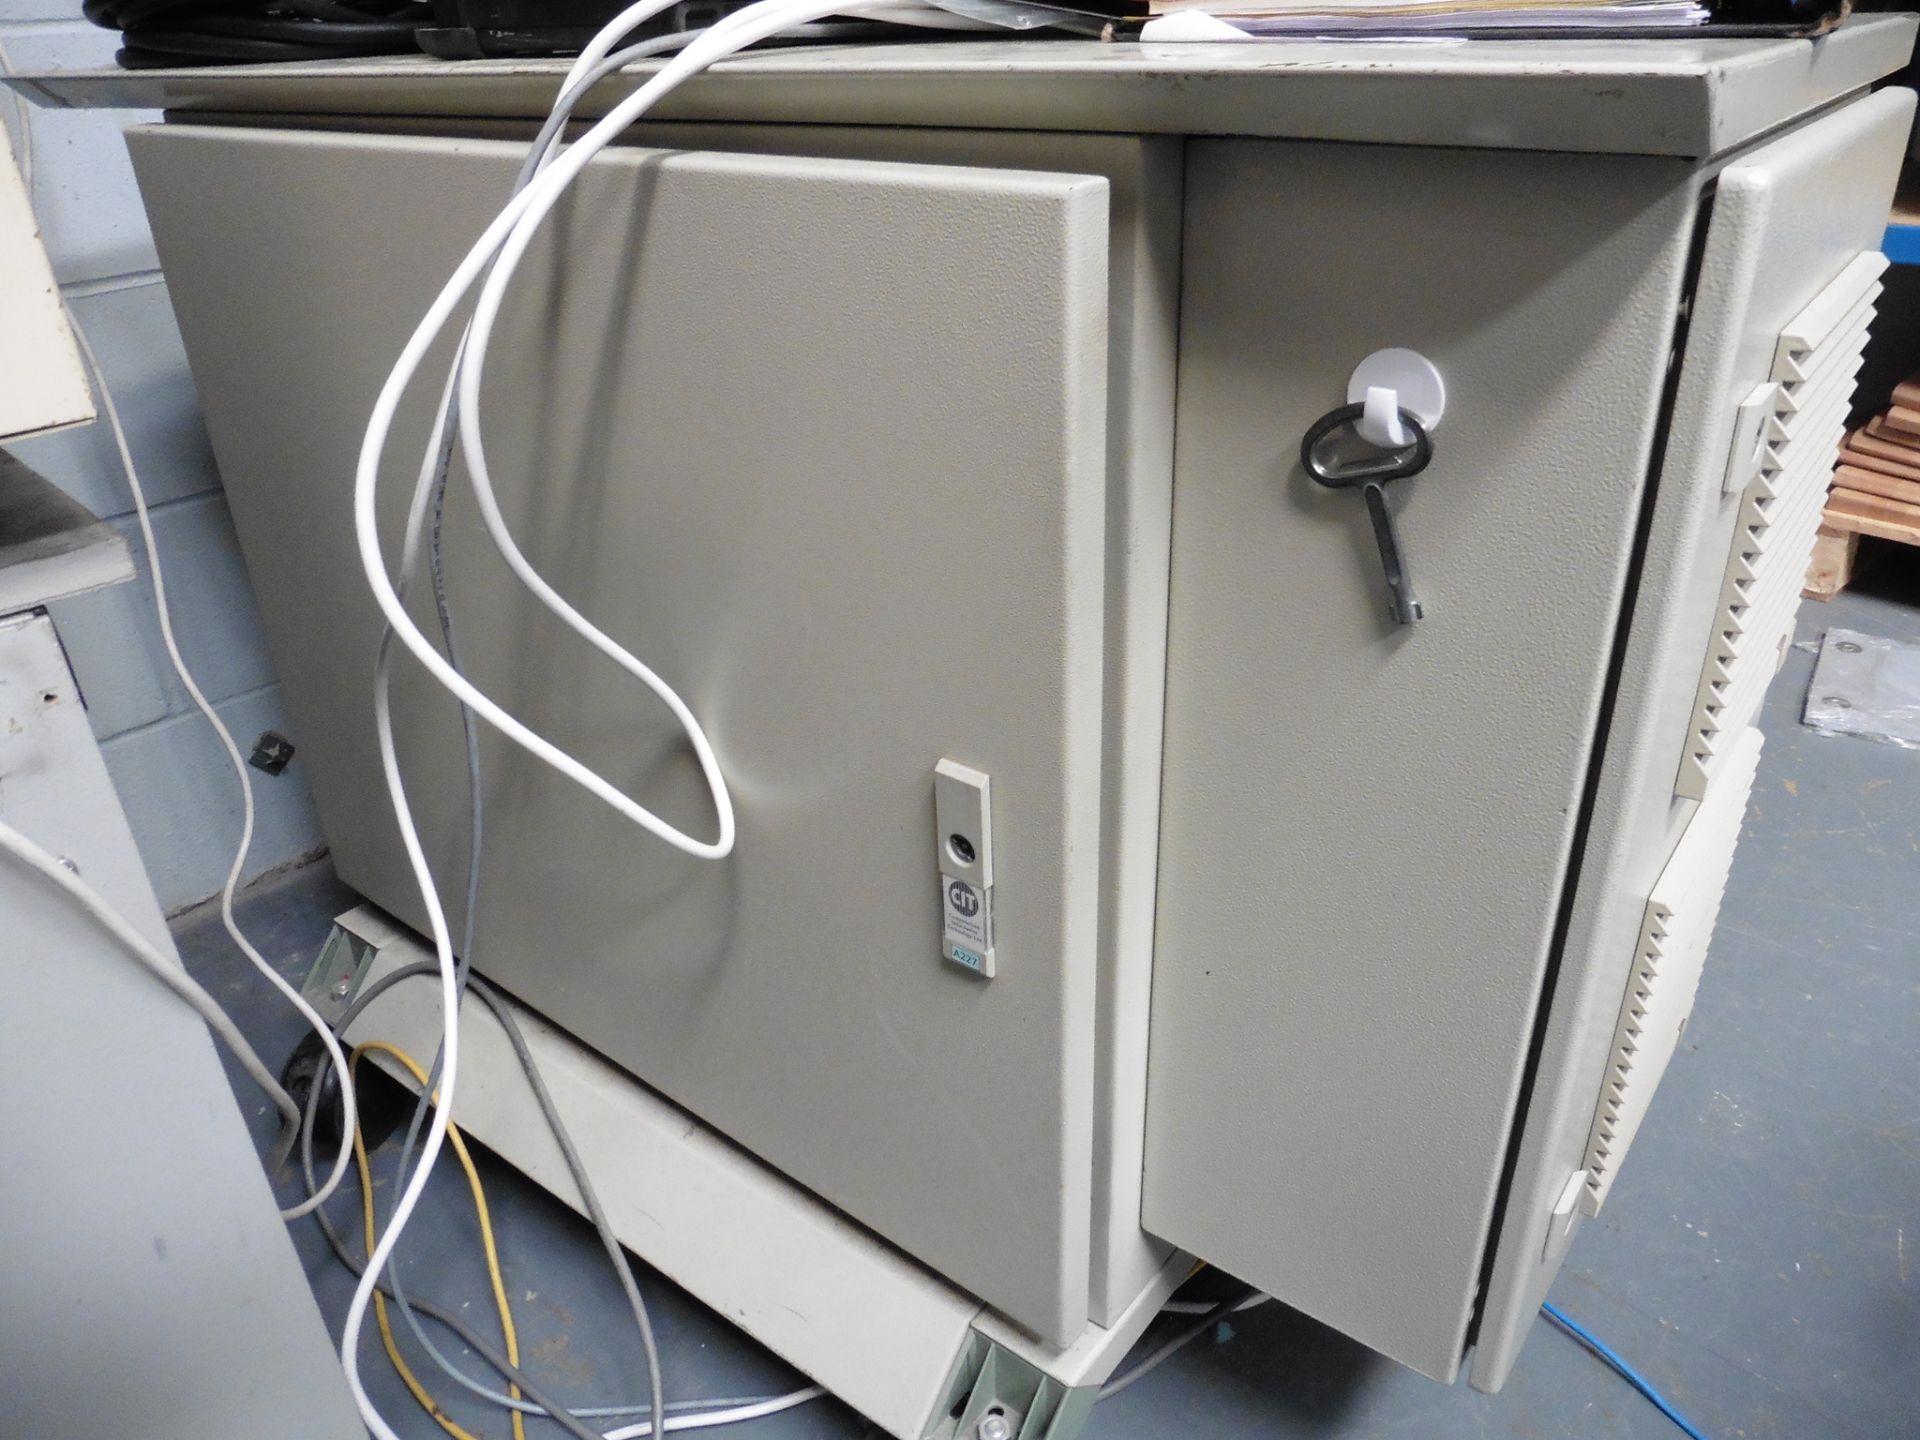 Balteau graphic generator 160KV cathodic industrial X-Ray generator max power 400 watt wired for - Image 12 of 12